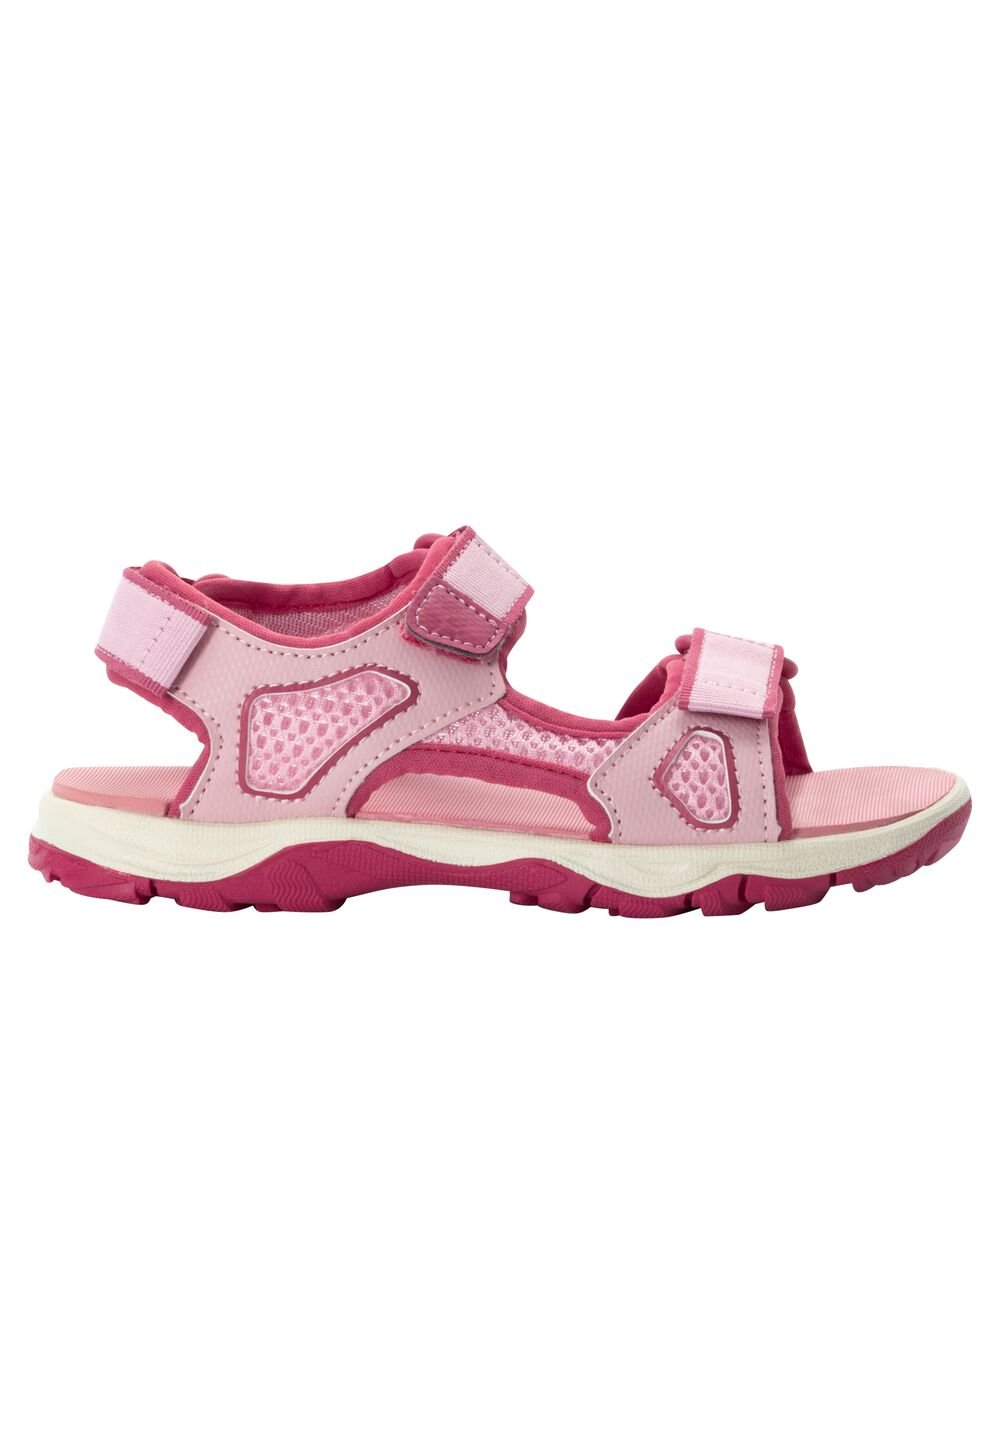 Jack Wolfskin Taraco Beach Sandal Kids Kinderen sandalen 37 soft pink soft pink